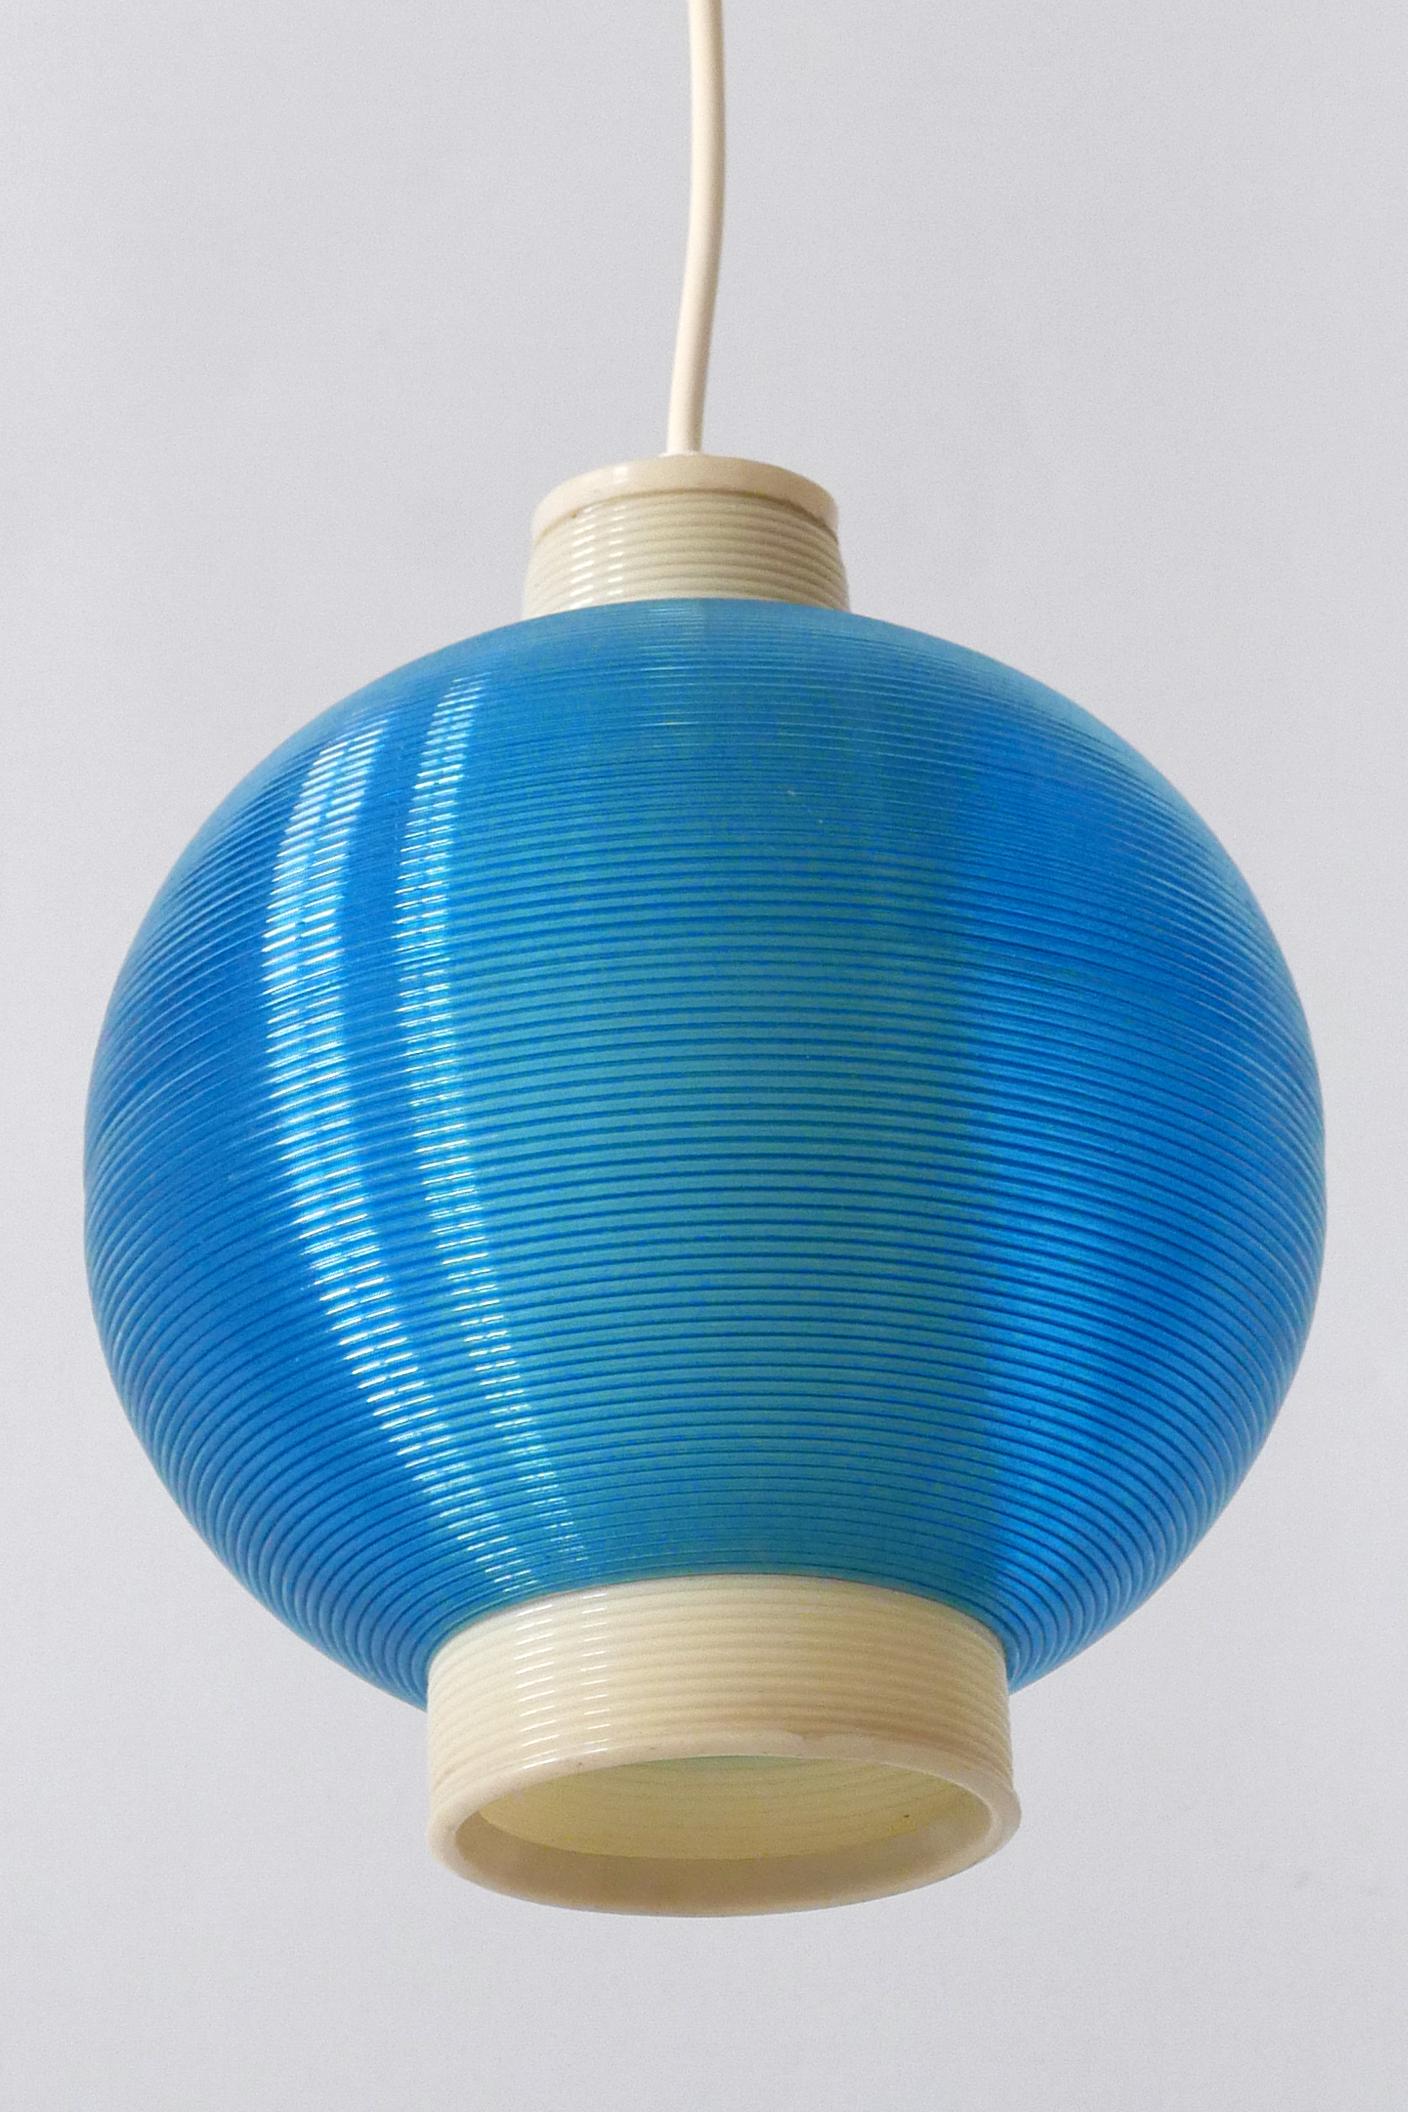 Rare Mid-Century Modern Rotaflex Pendant Lamp by Yasha Heifetz USA 1960s For Sale 8